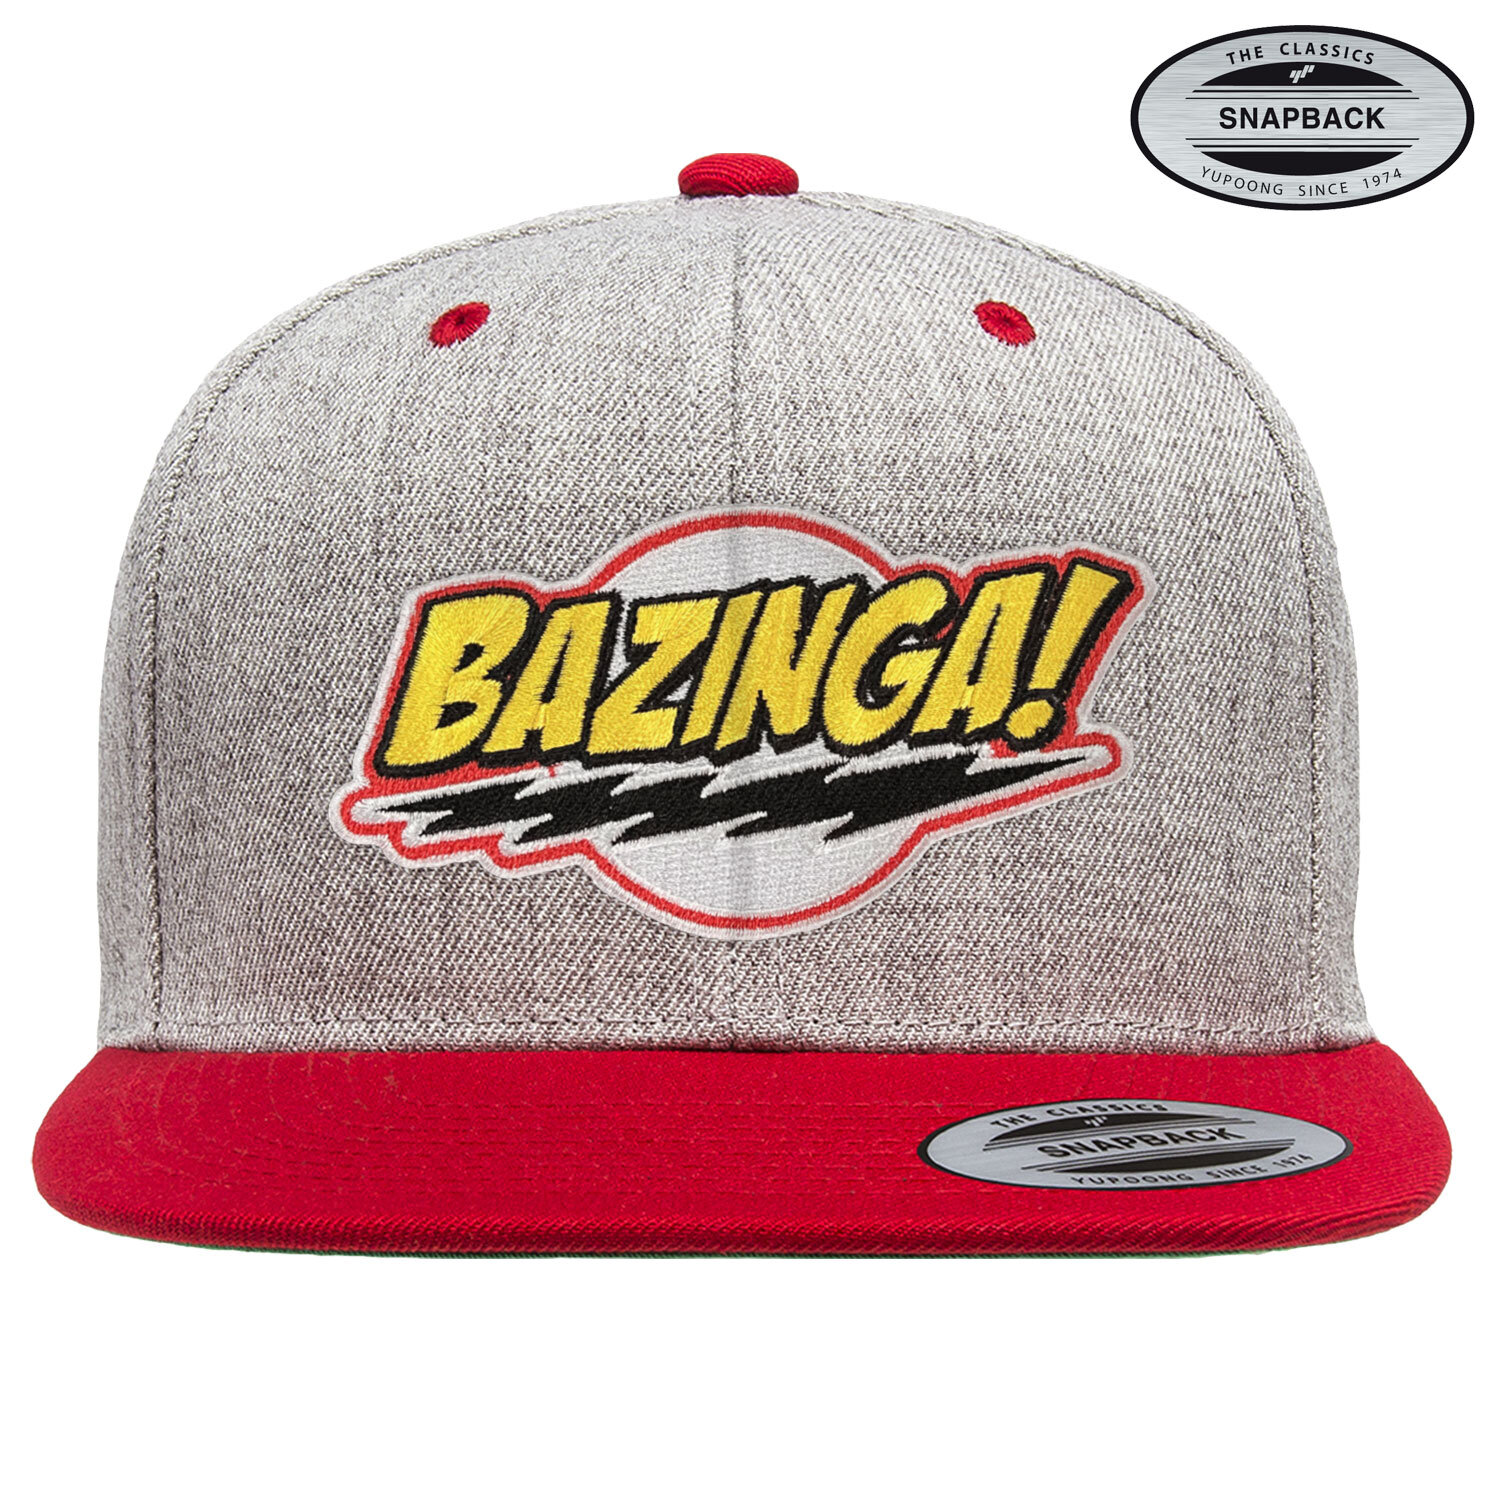 Bazinga Patch Premium Snapback Cap